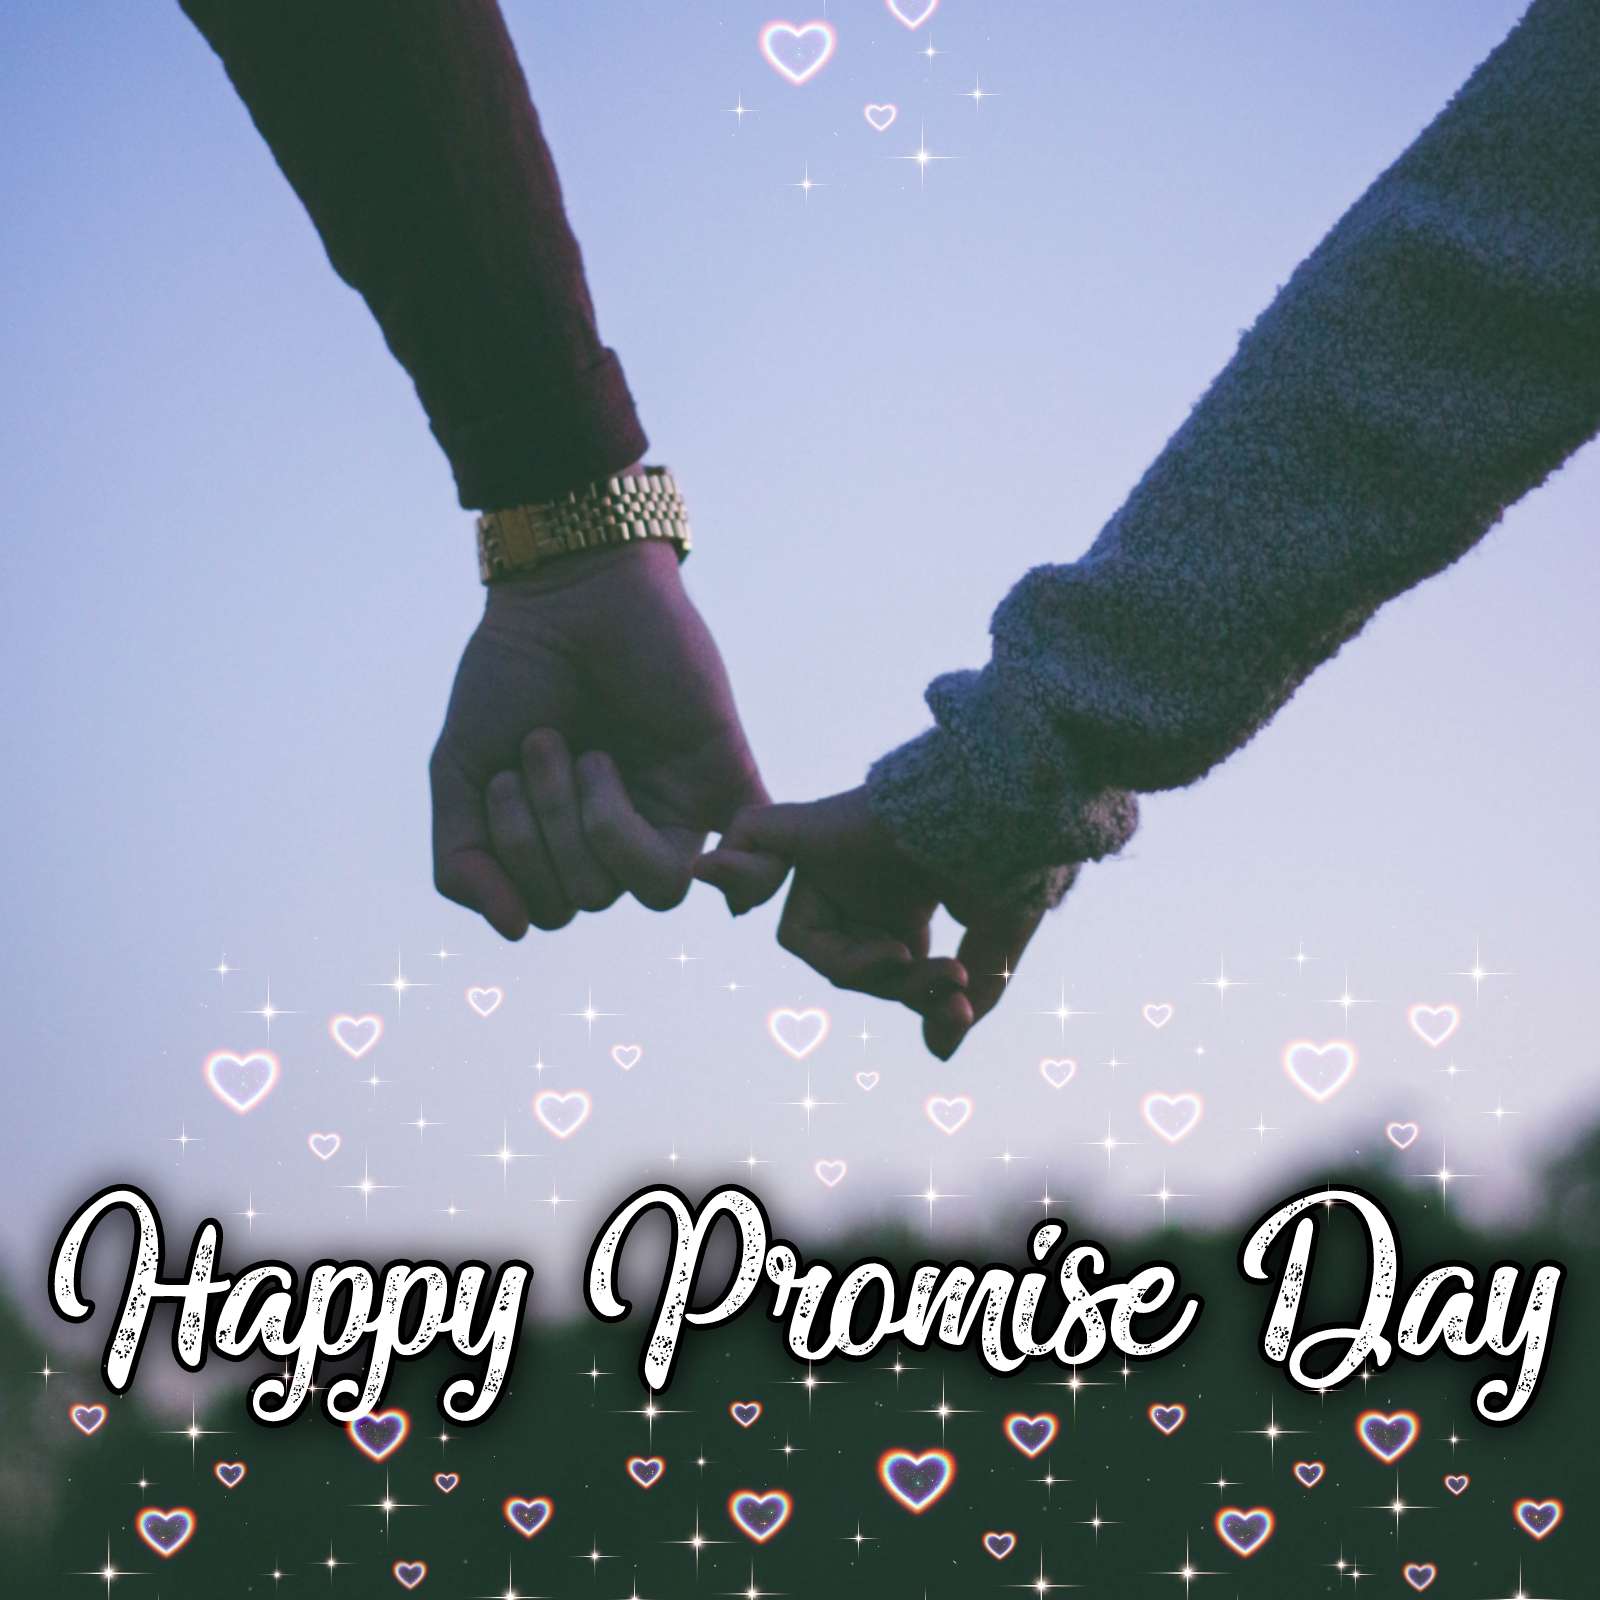 11 February 2022 Promise Day Images HD Download - ShayariMaza